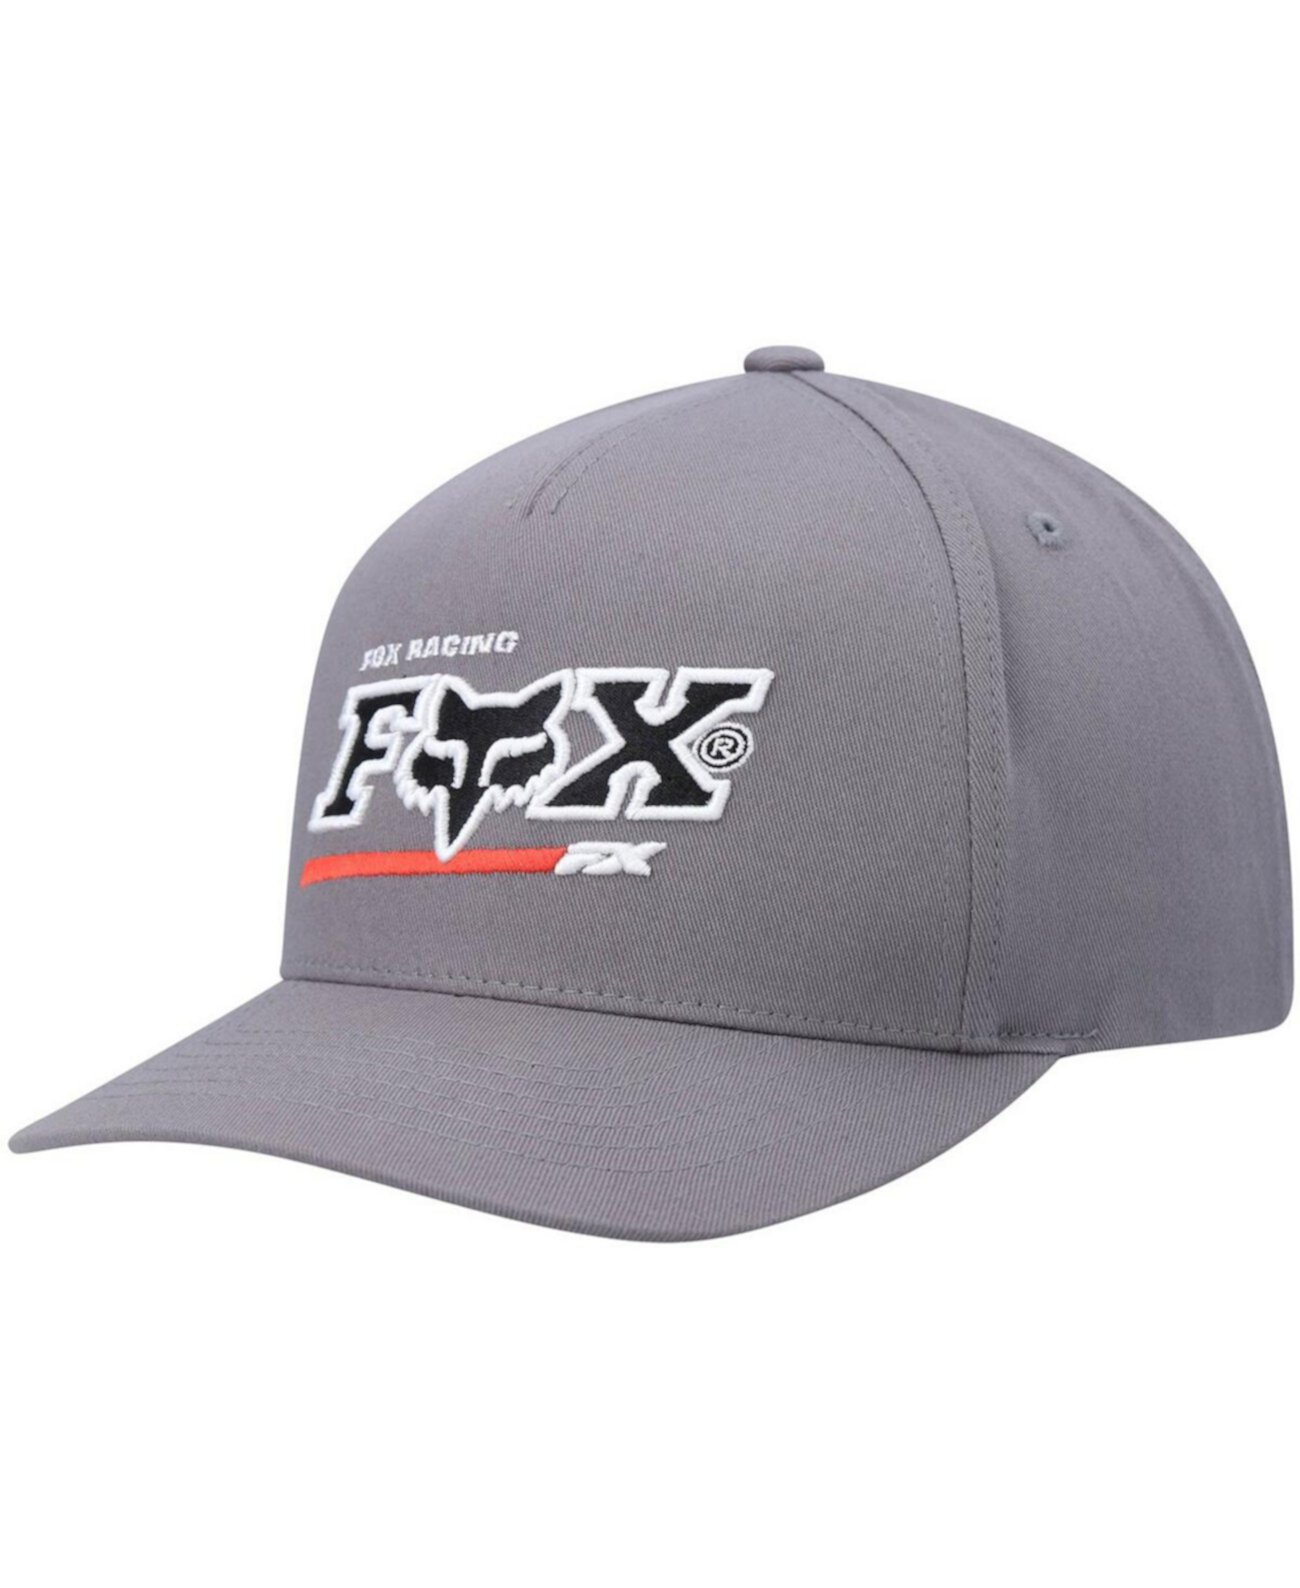 Мужская серая гоночная кепка Snapback Powerband Fox